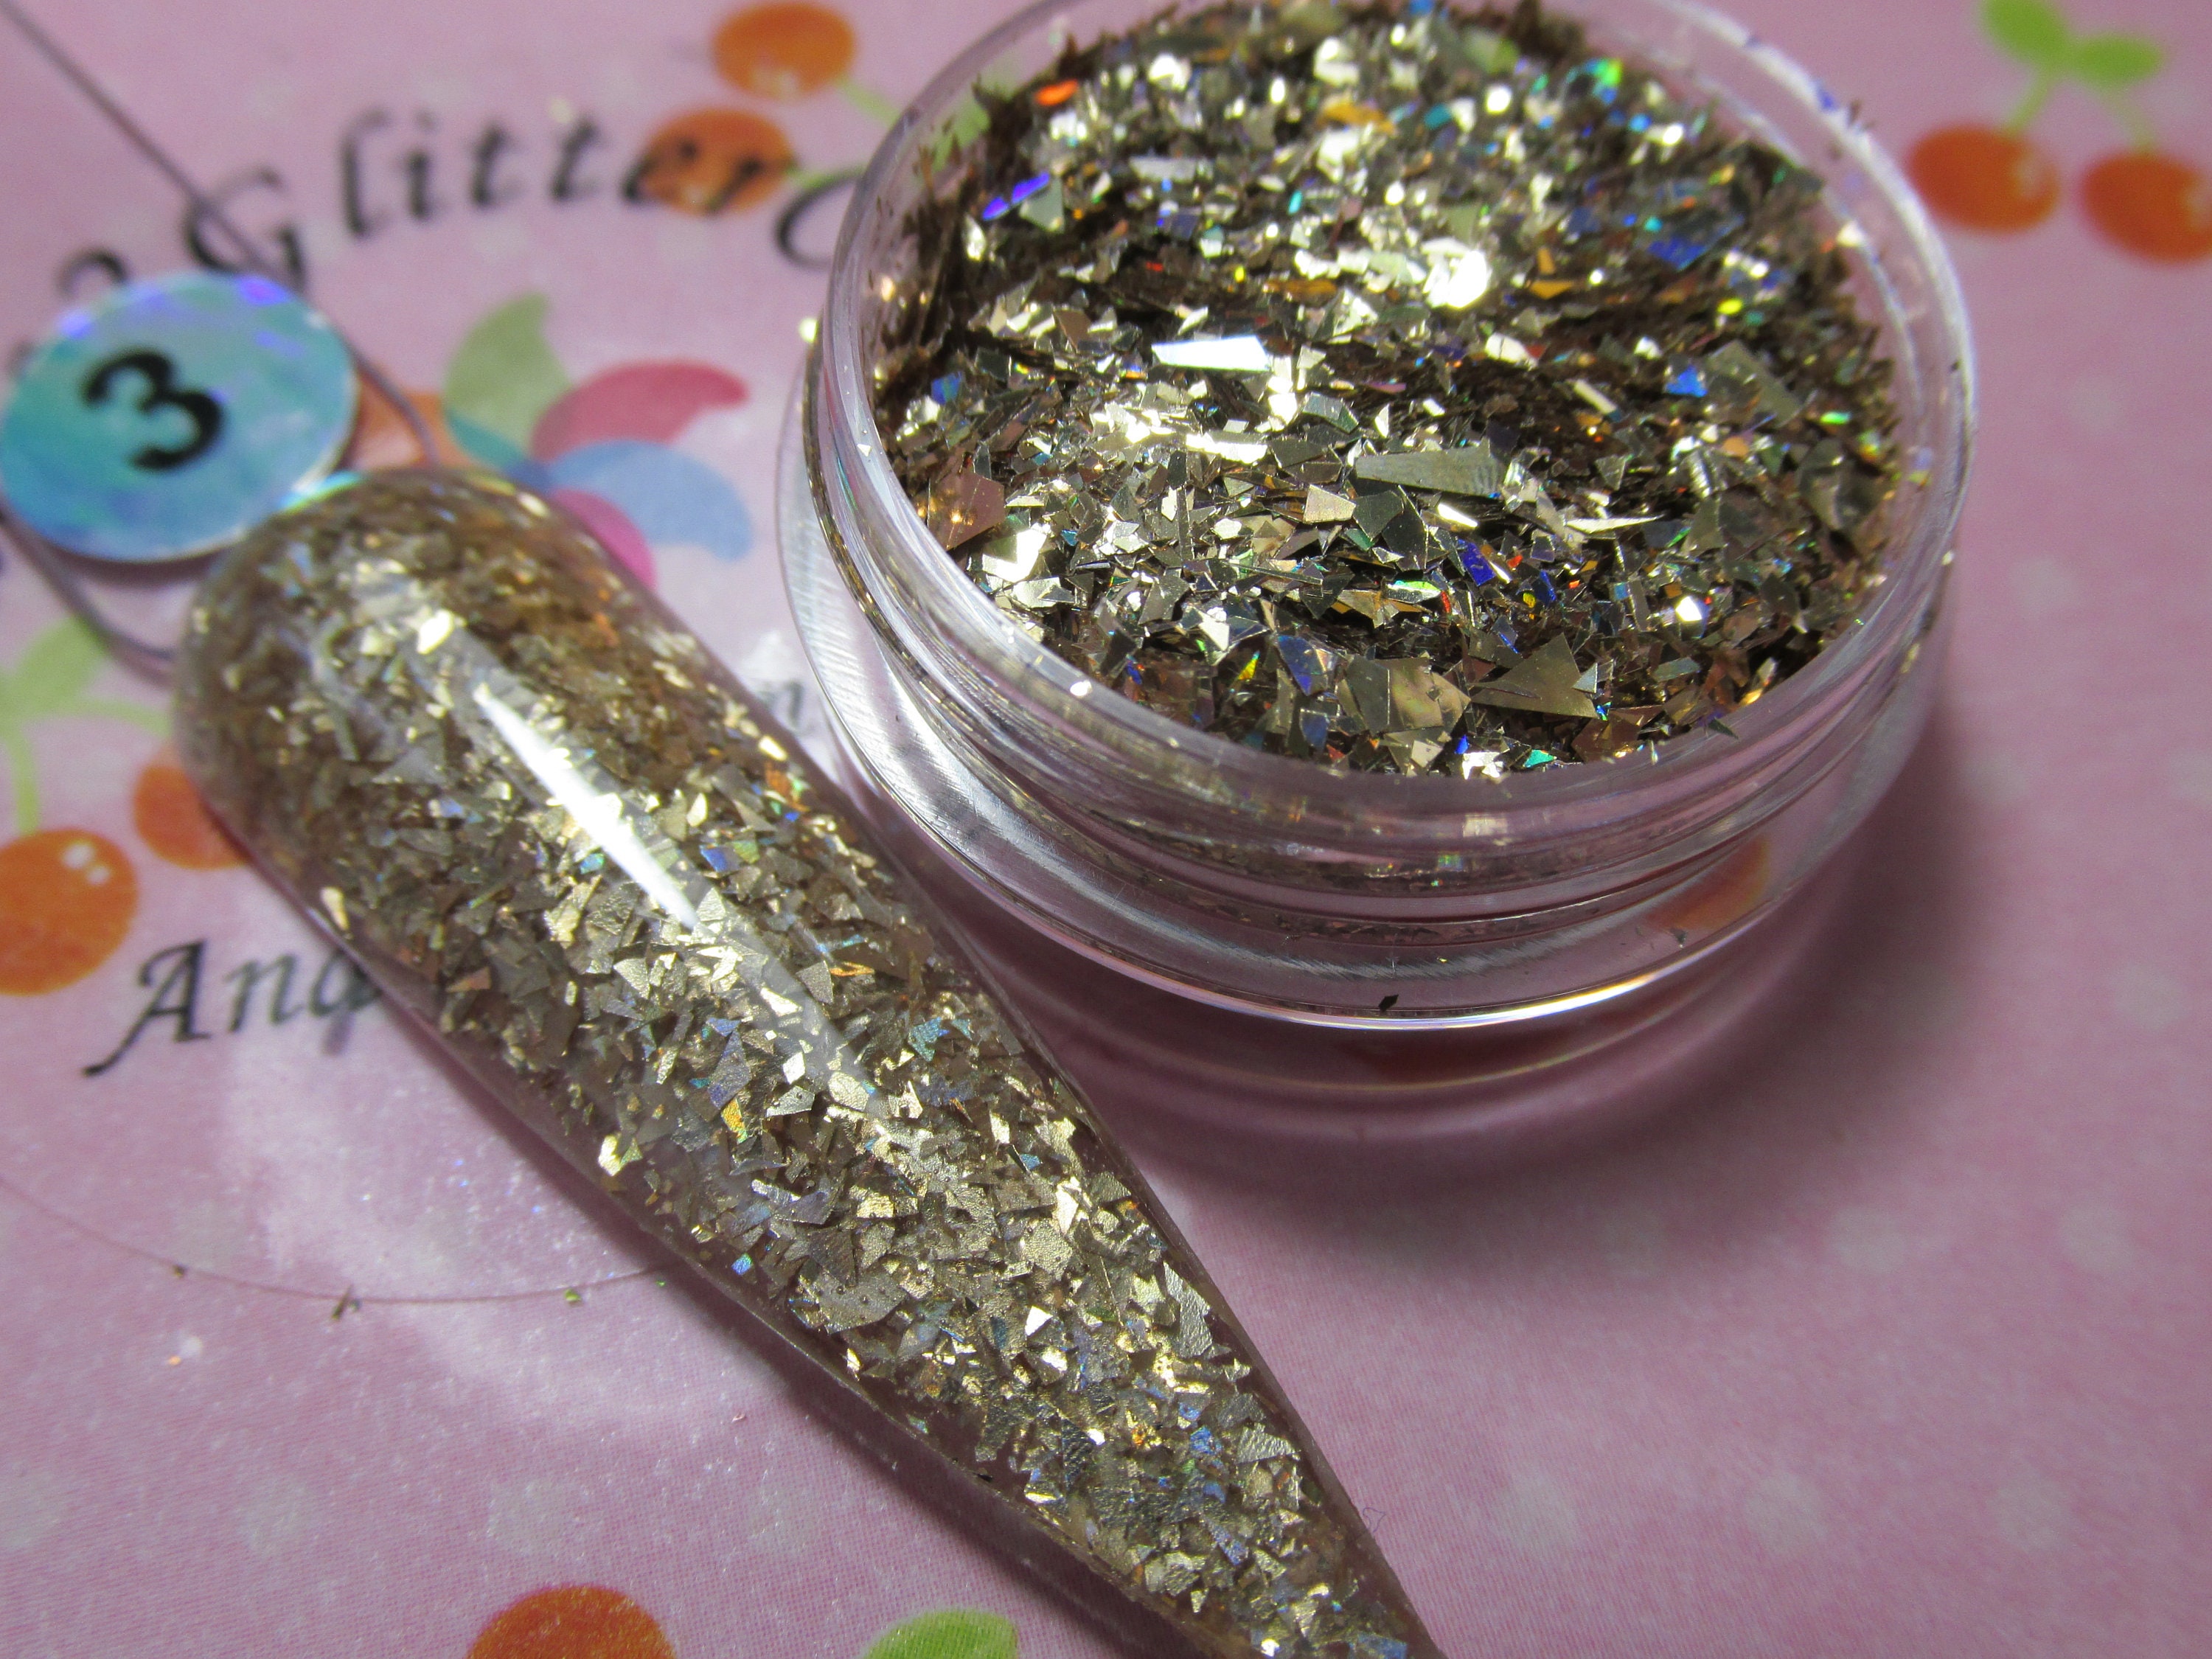 Gold Silver Glitter Sequin Nail Art glitter Flakes